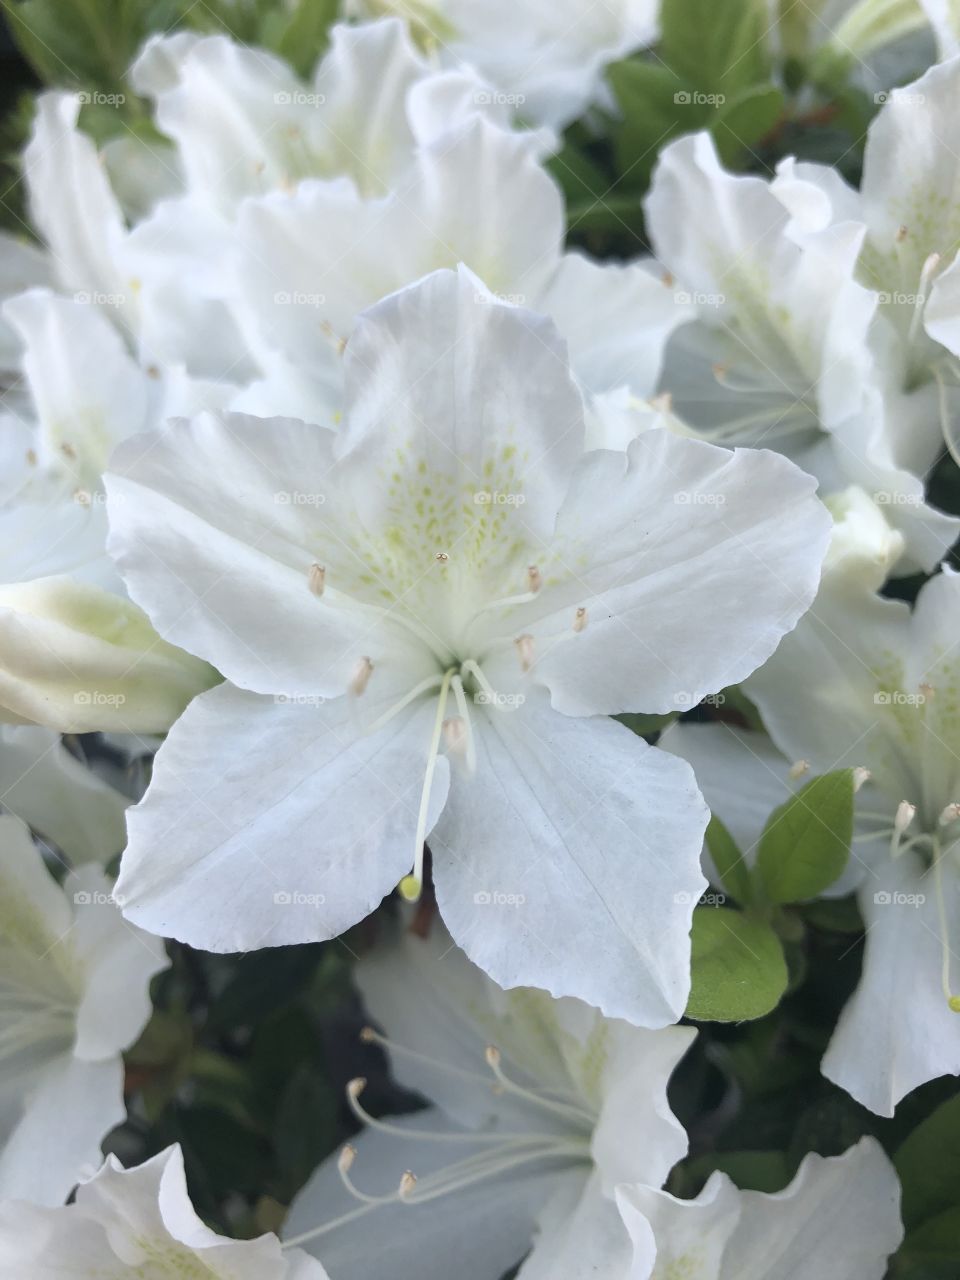 Five Point White Flower Blooms. Signs of Spring. Nature’s Beauty. Bush/Shrub Awakening.